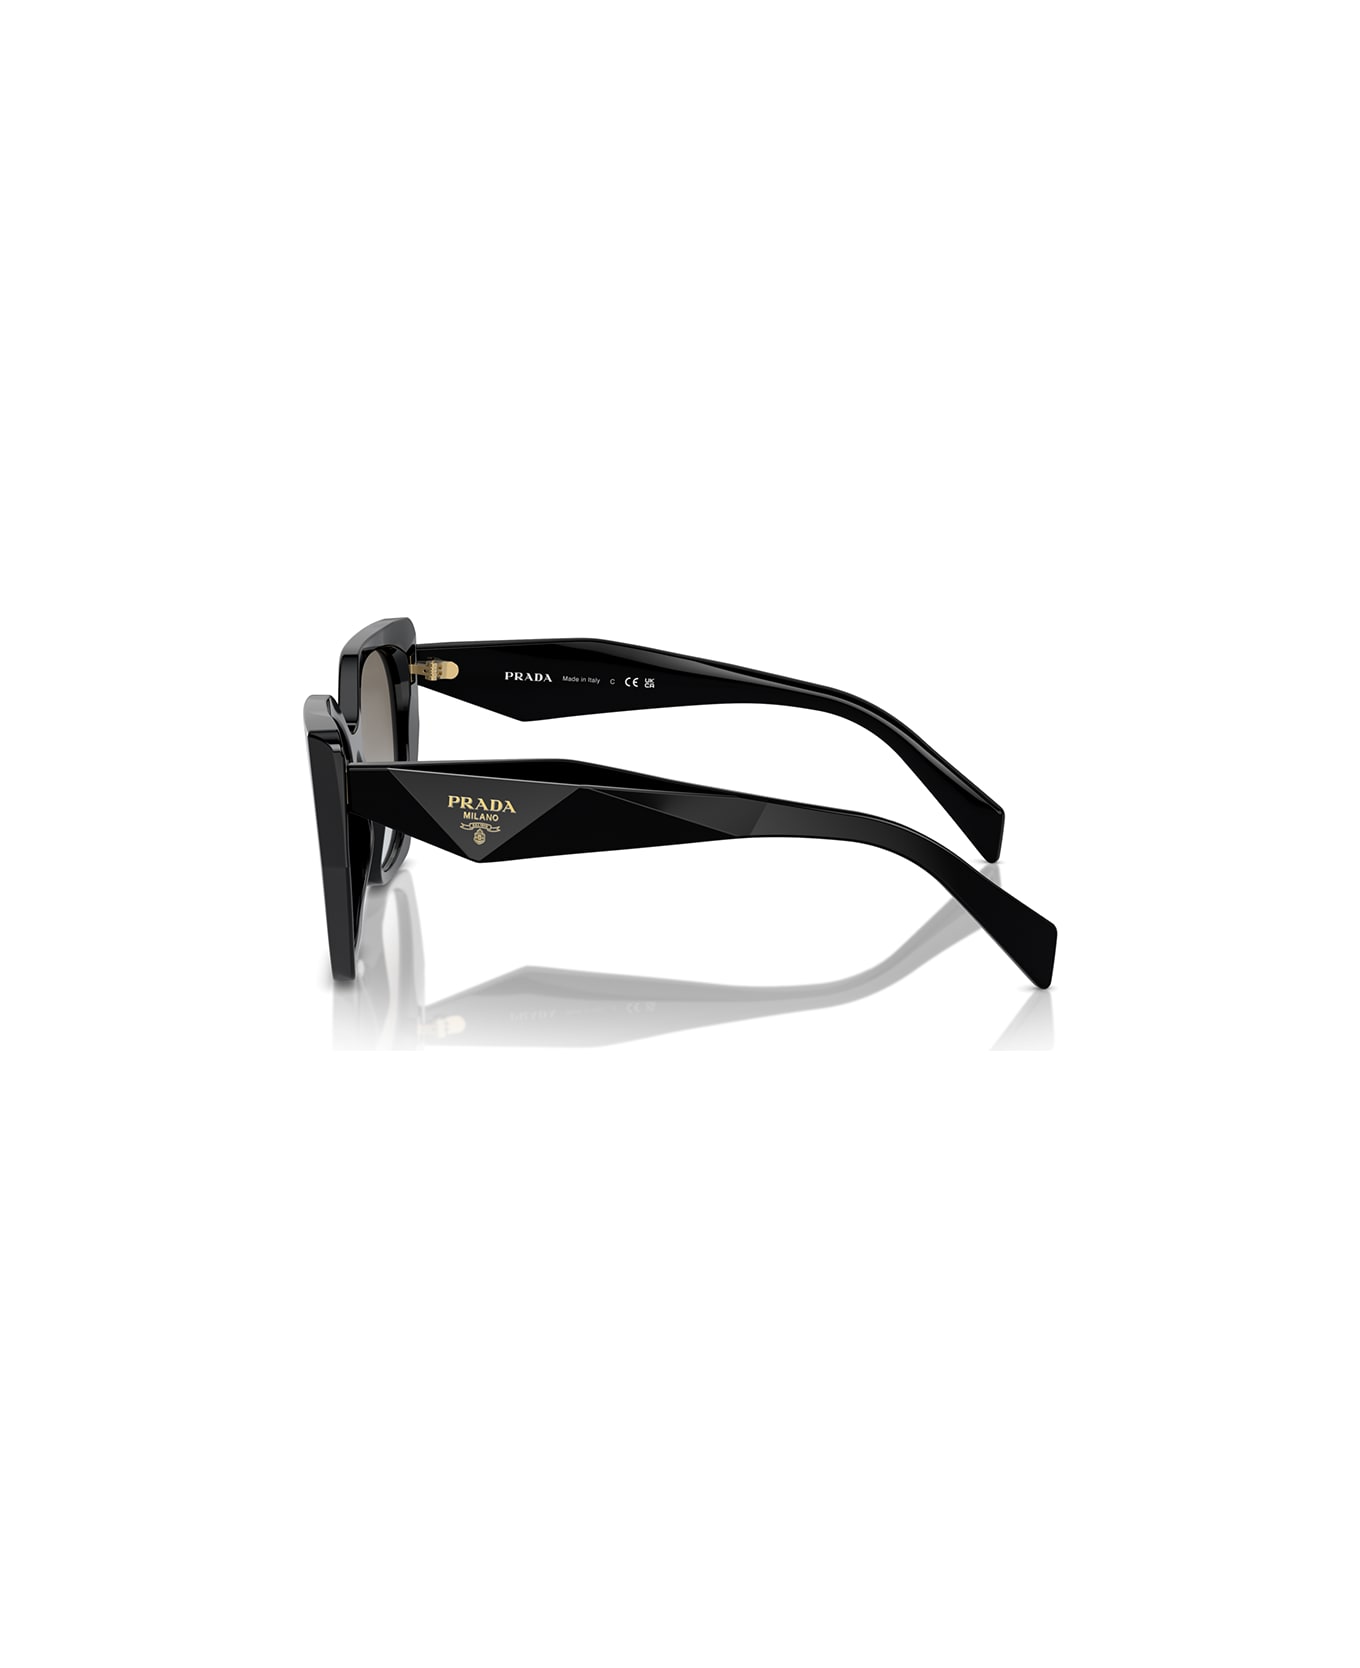 Prada Eyewear Sunglasses - Nero/Grigio